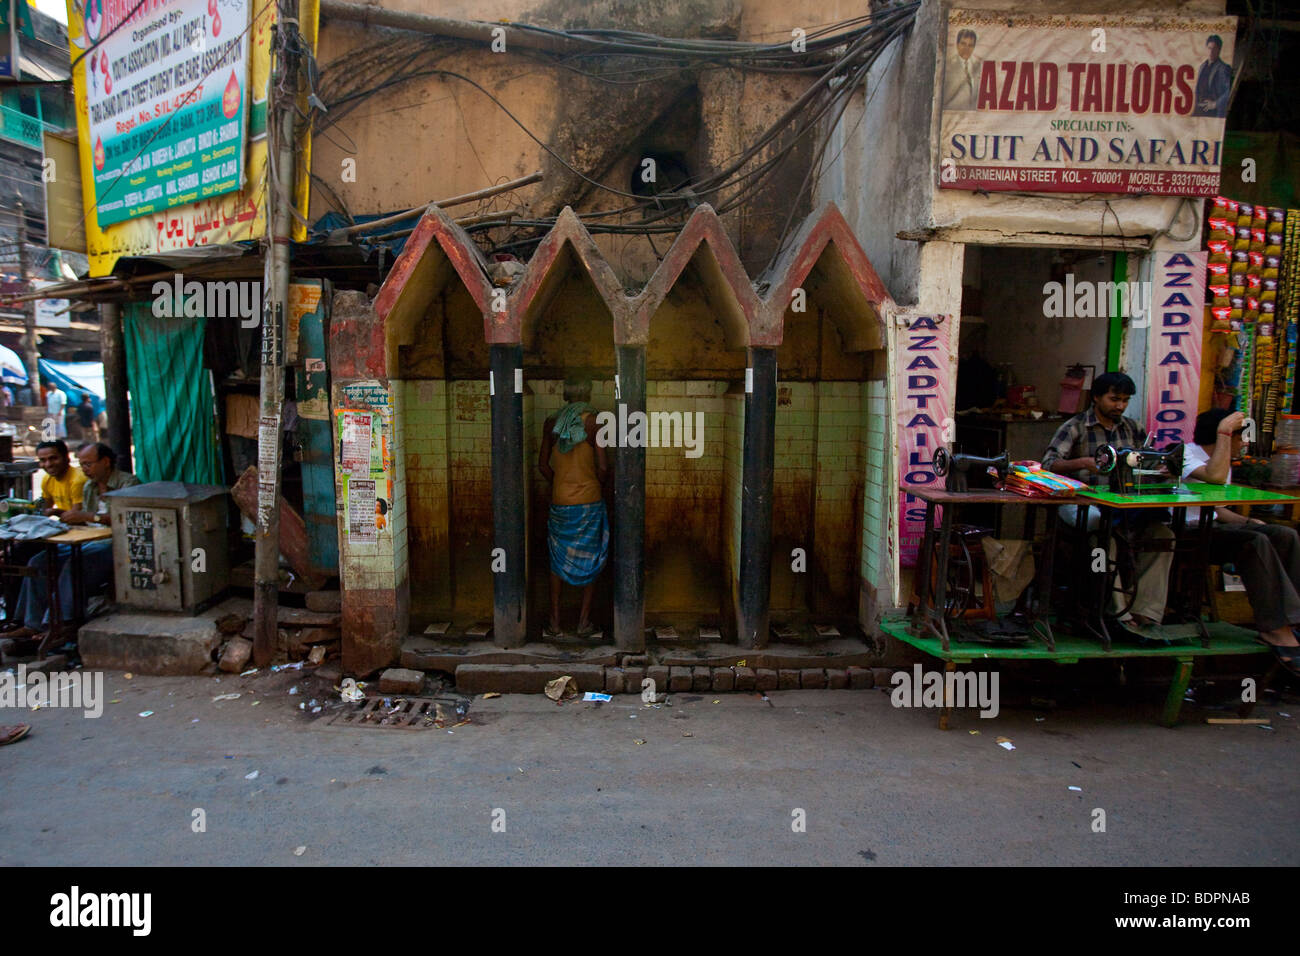 Public Urinal in Calcutta India Stock Photo